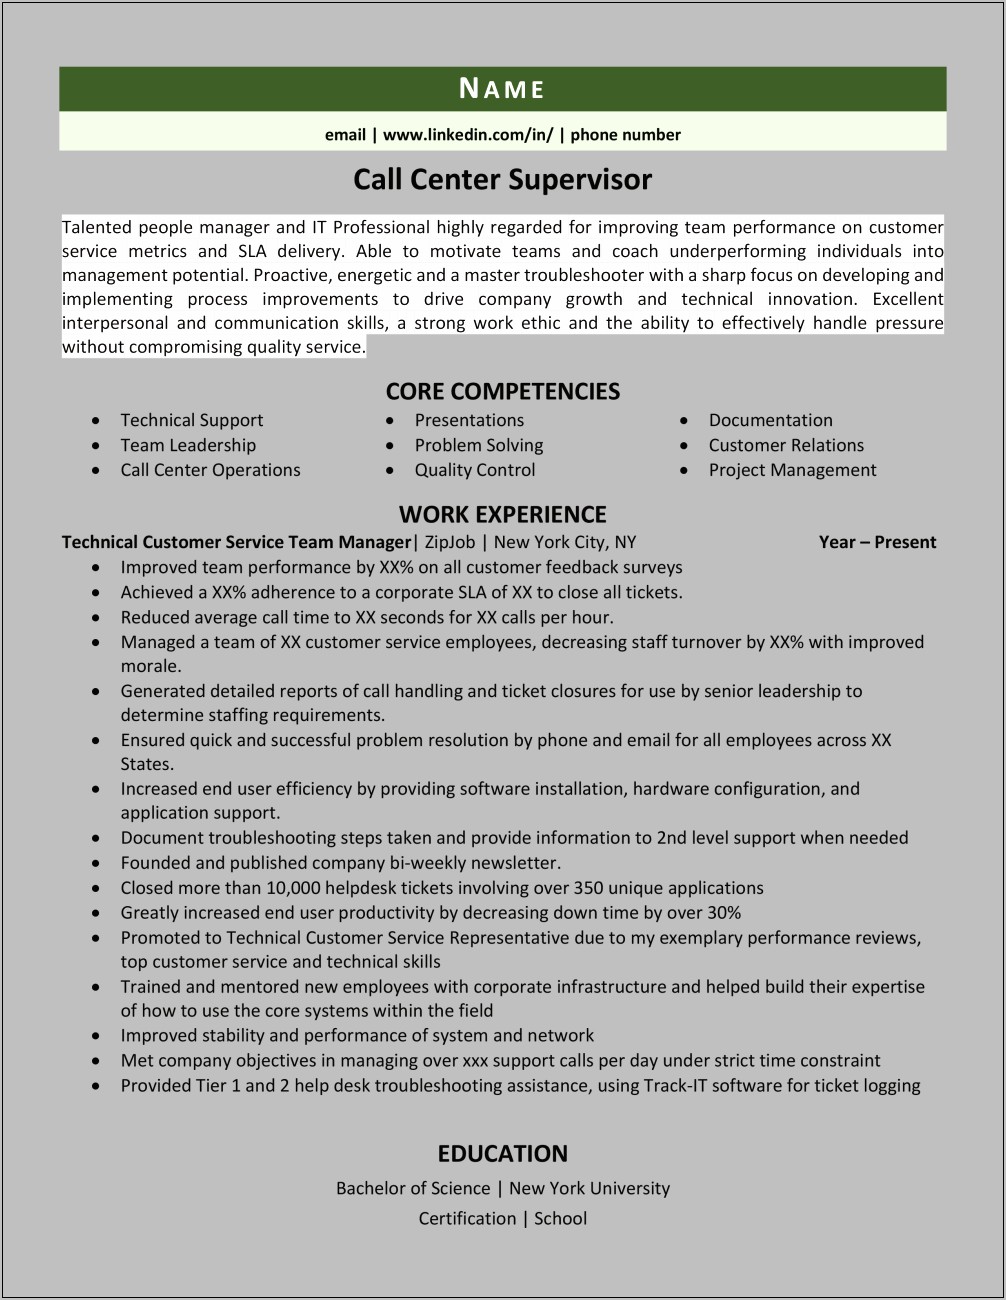 Call Center Supervisor Job Resume